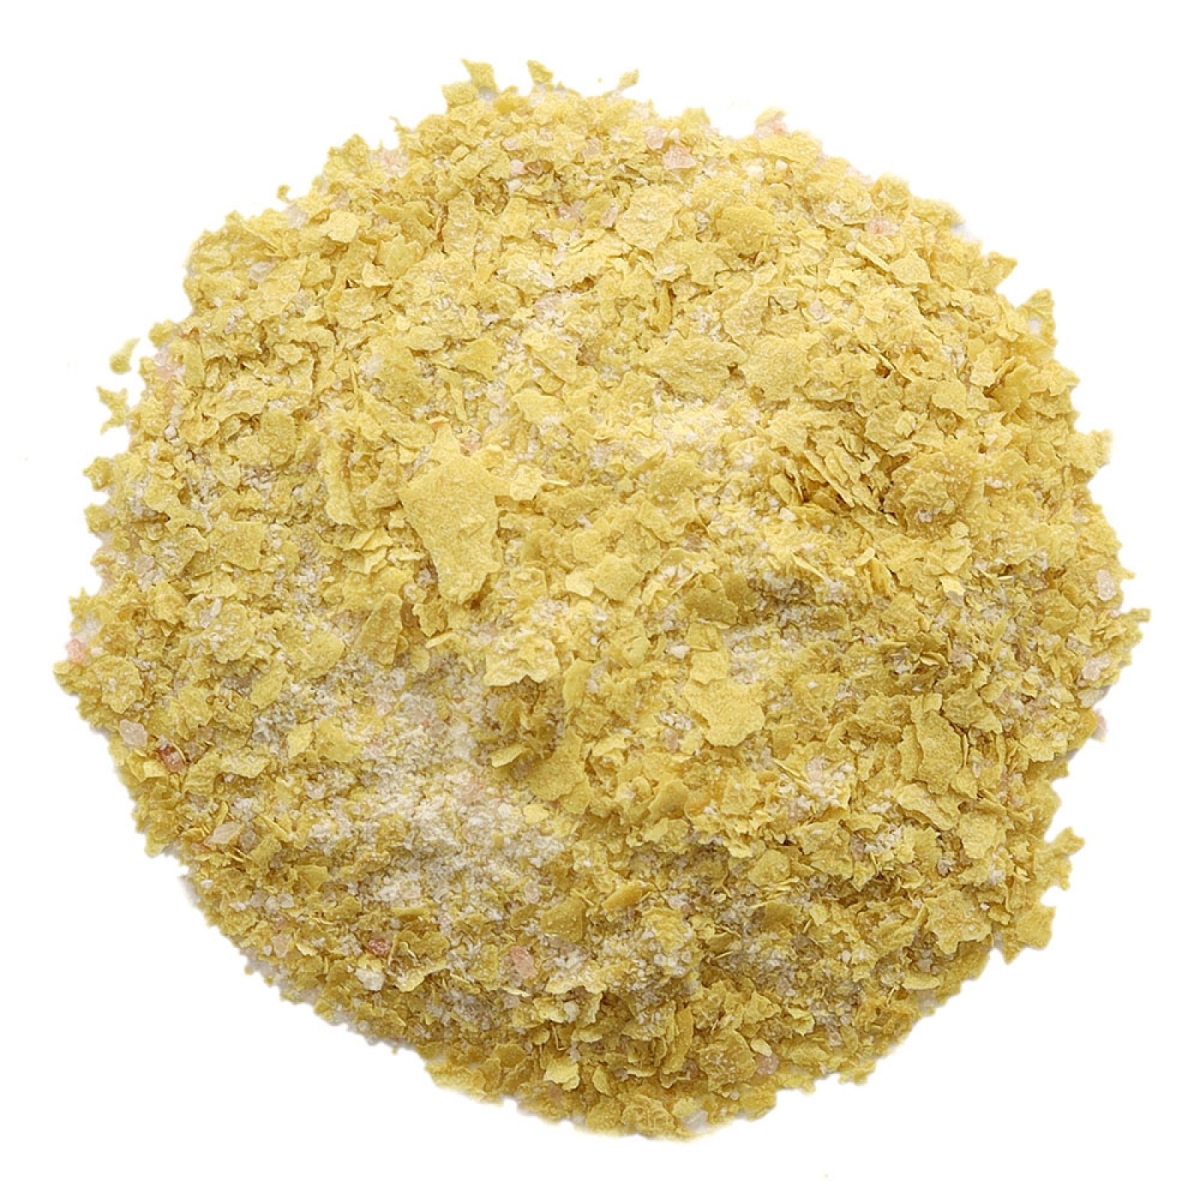 Picture of Frontier Bulk 2318 Salt & Vinegar Nutritional Yeast Blend Powder